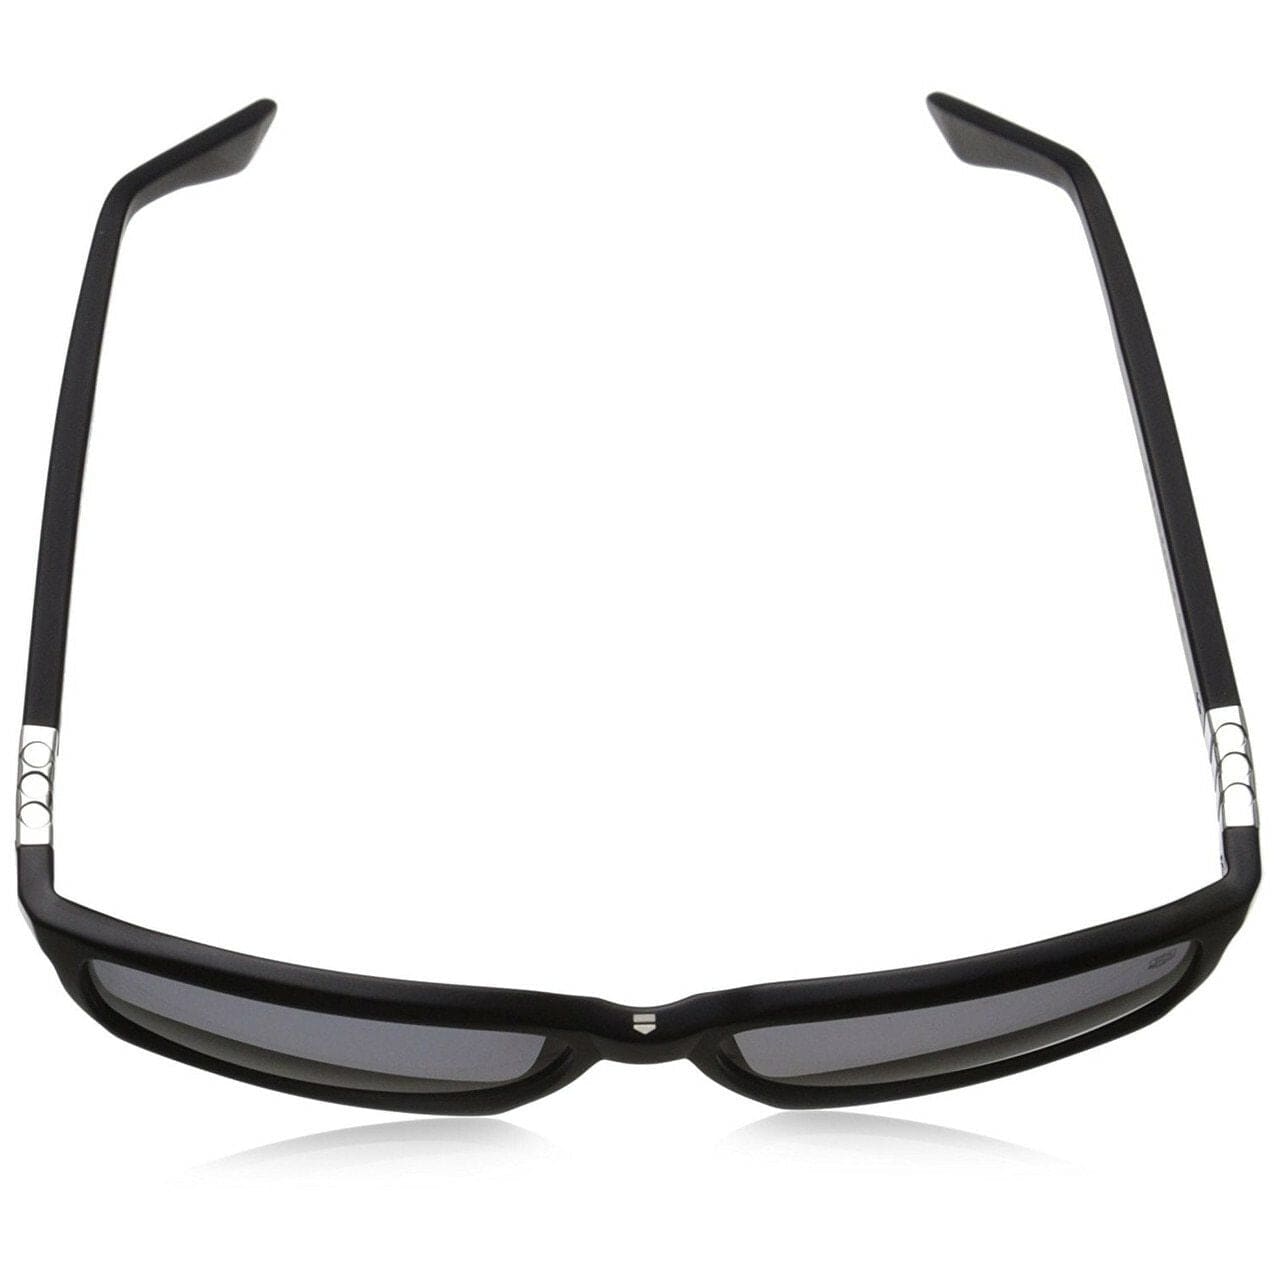 TAG Heuer Legend 9381 101 Rectangular 58mm Lens Acetate Frame Sunglasses - Matte Black / Gradient Grey 669381101581603 751105391240